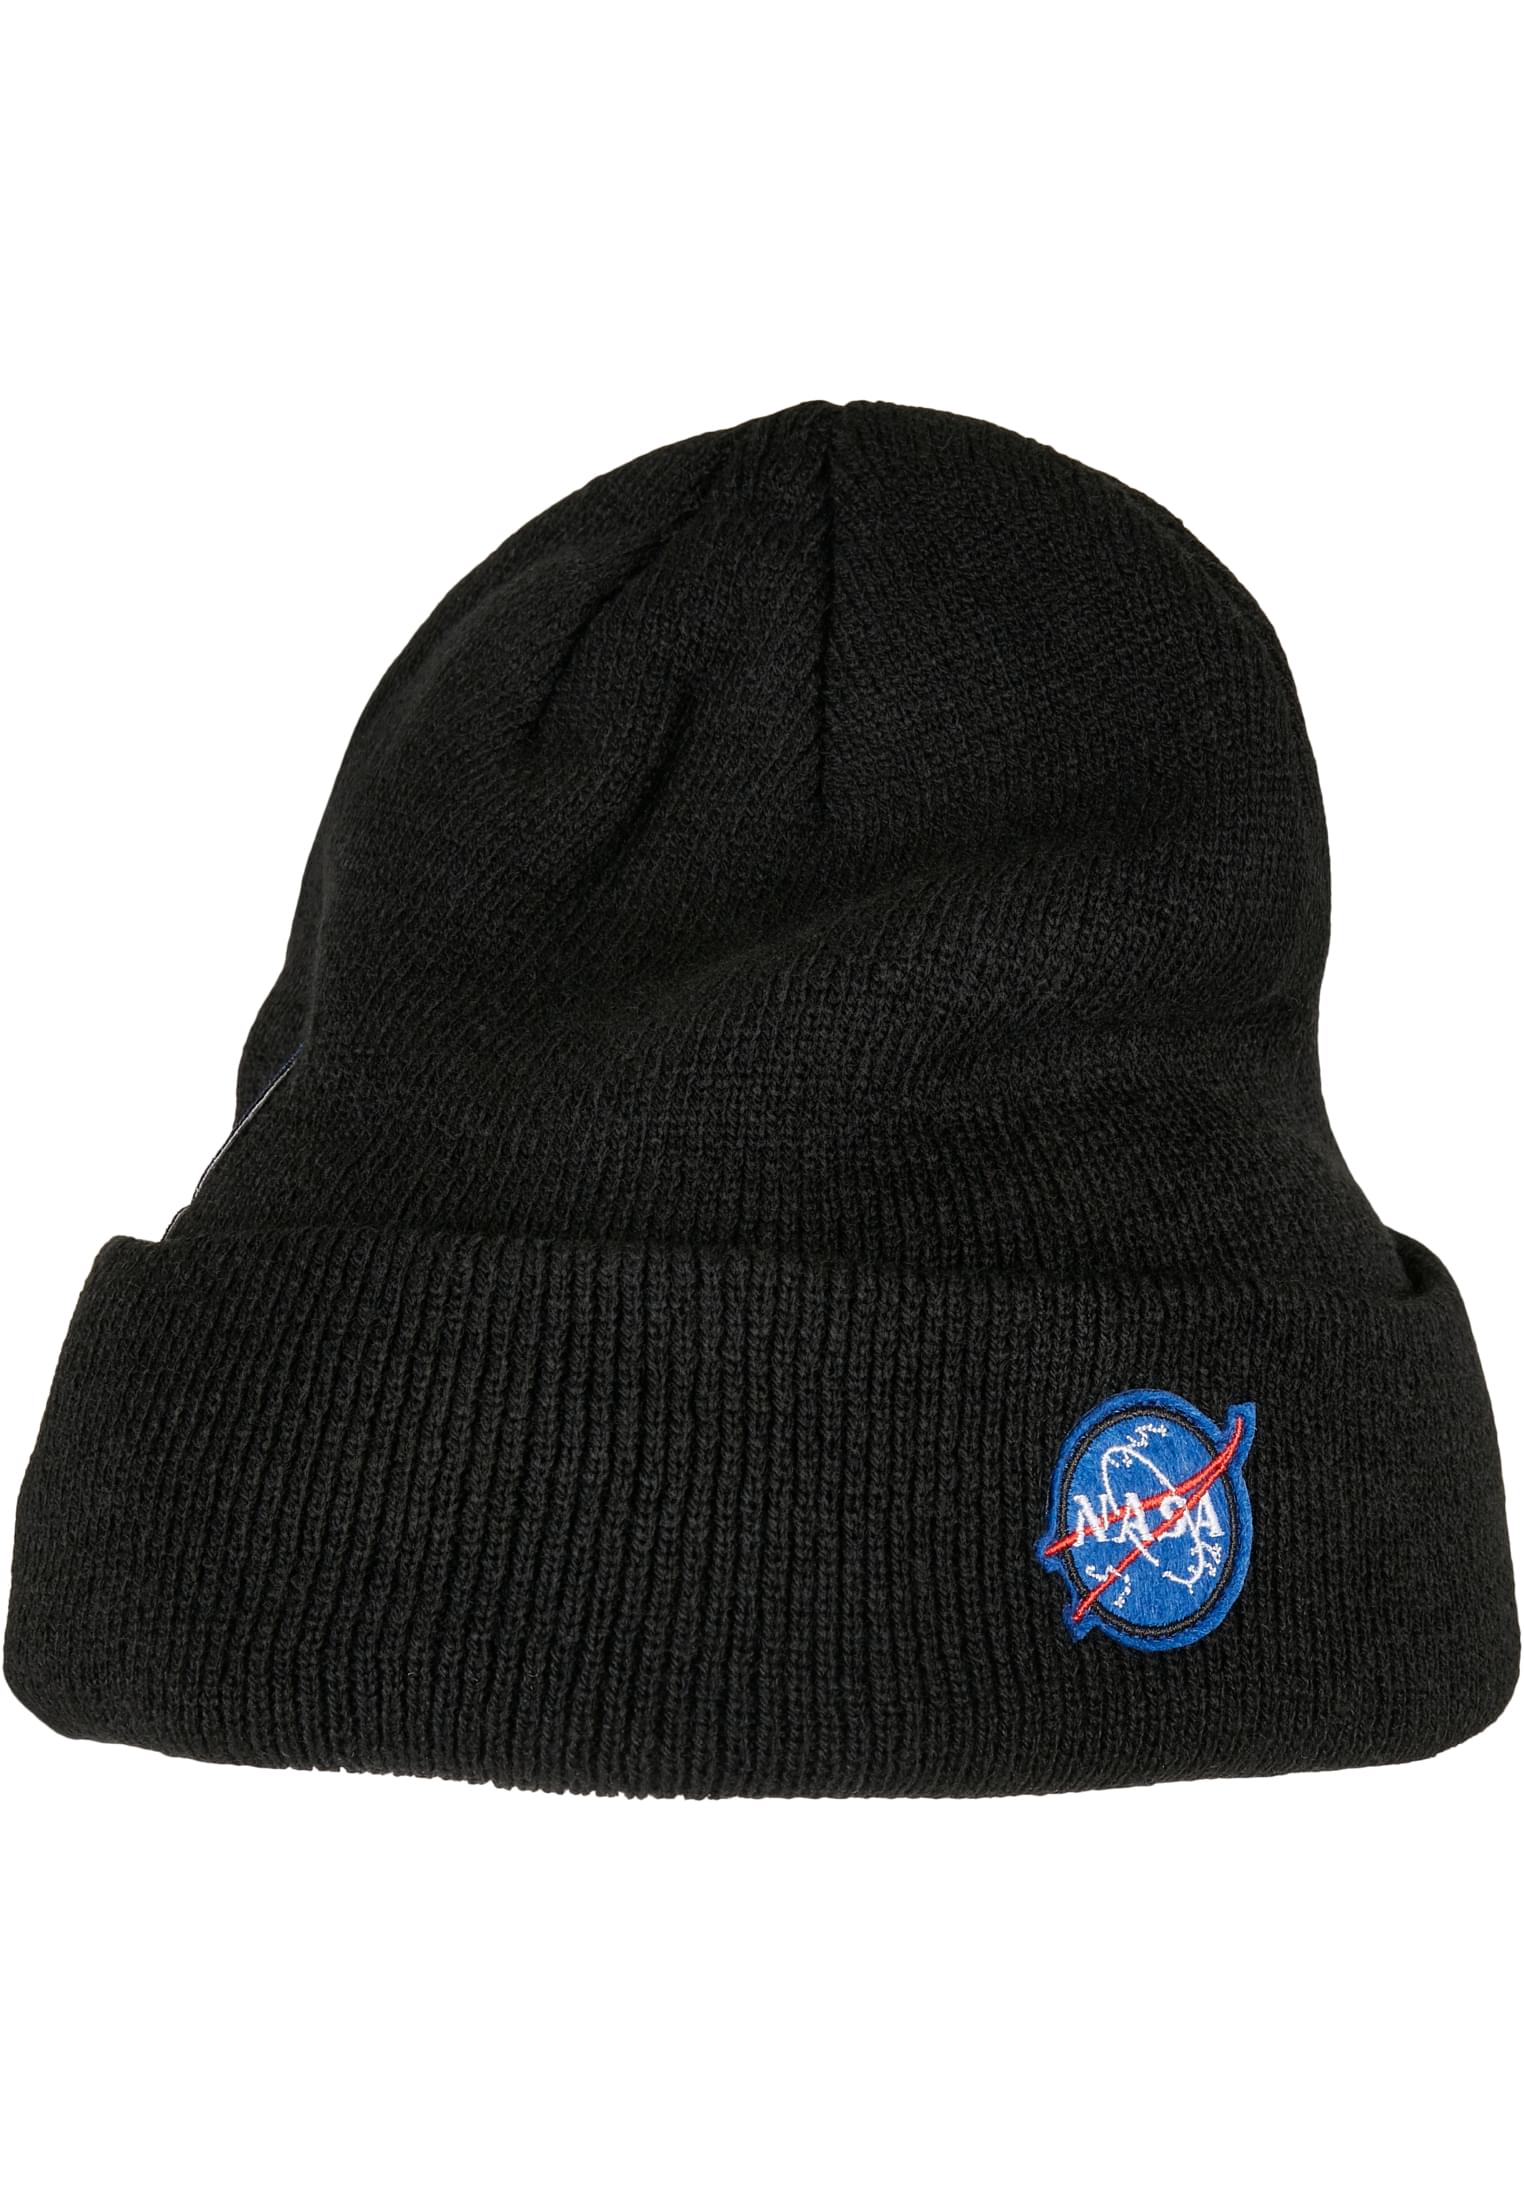 NASA Embroidery Beanie-MT2081